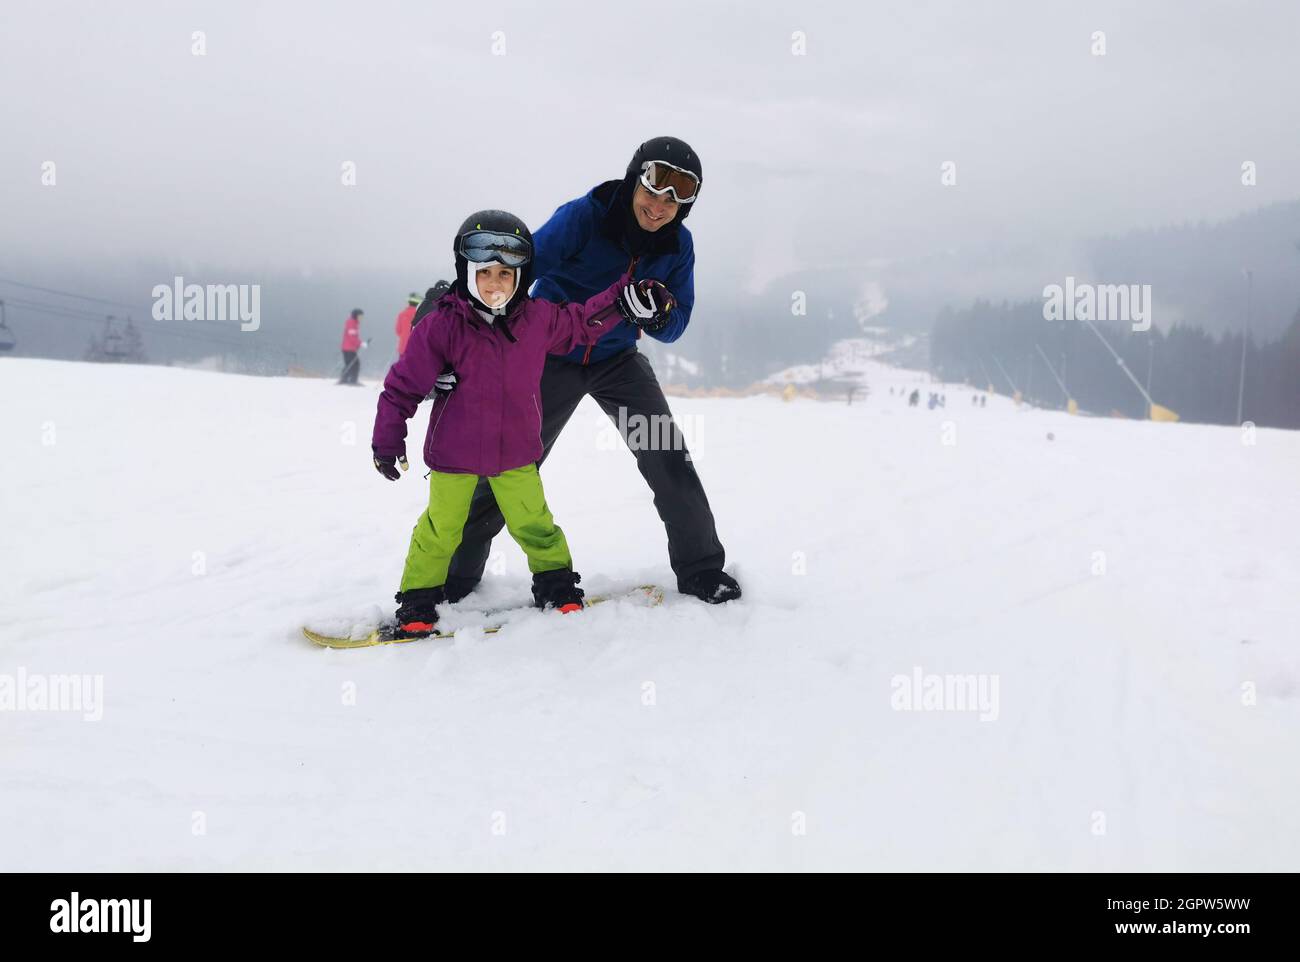 snowboard lesson in winter resort Stock Photo